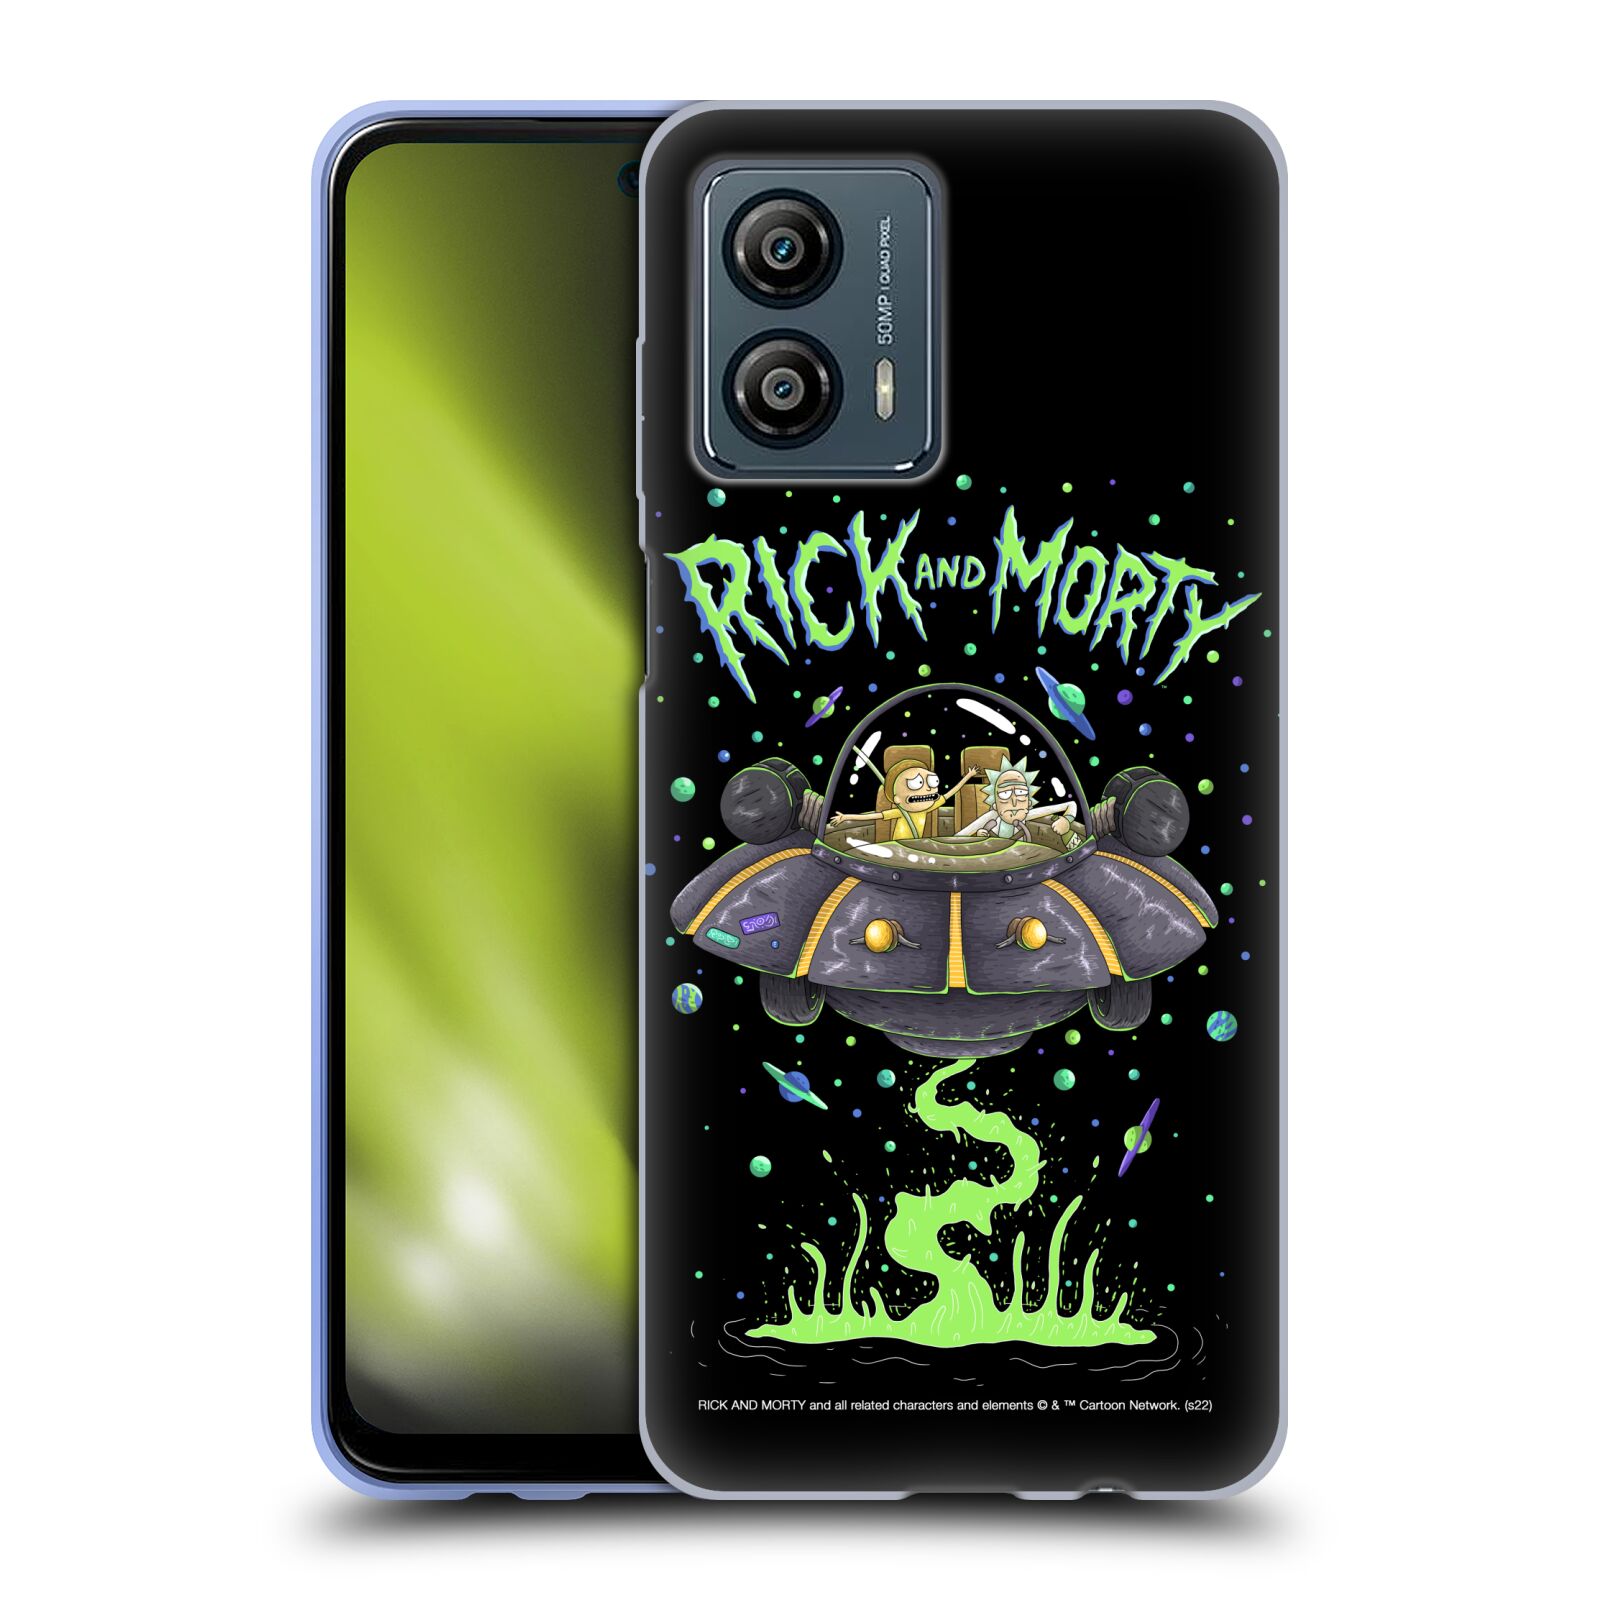 Silikonové pouzdro na mobil Motorola Moto G53 5G - Rick And Morty - Space Cruiser (Silikonový kryt, obal, pouzdro na mobilní telefon Motorola Moto G53 5G s licencovaným motivem Rick And Morty - Space Cruiser)